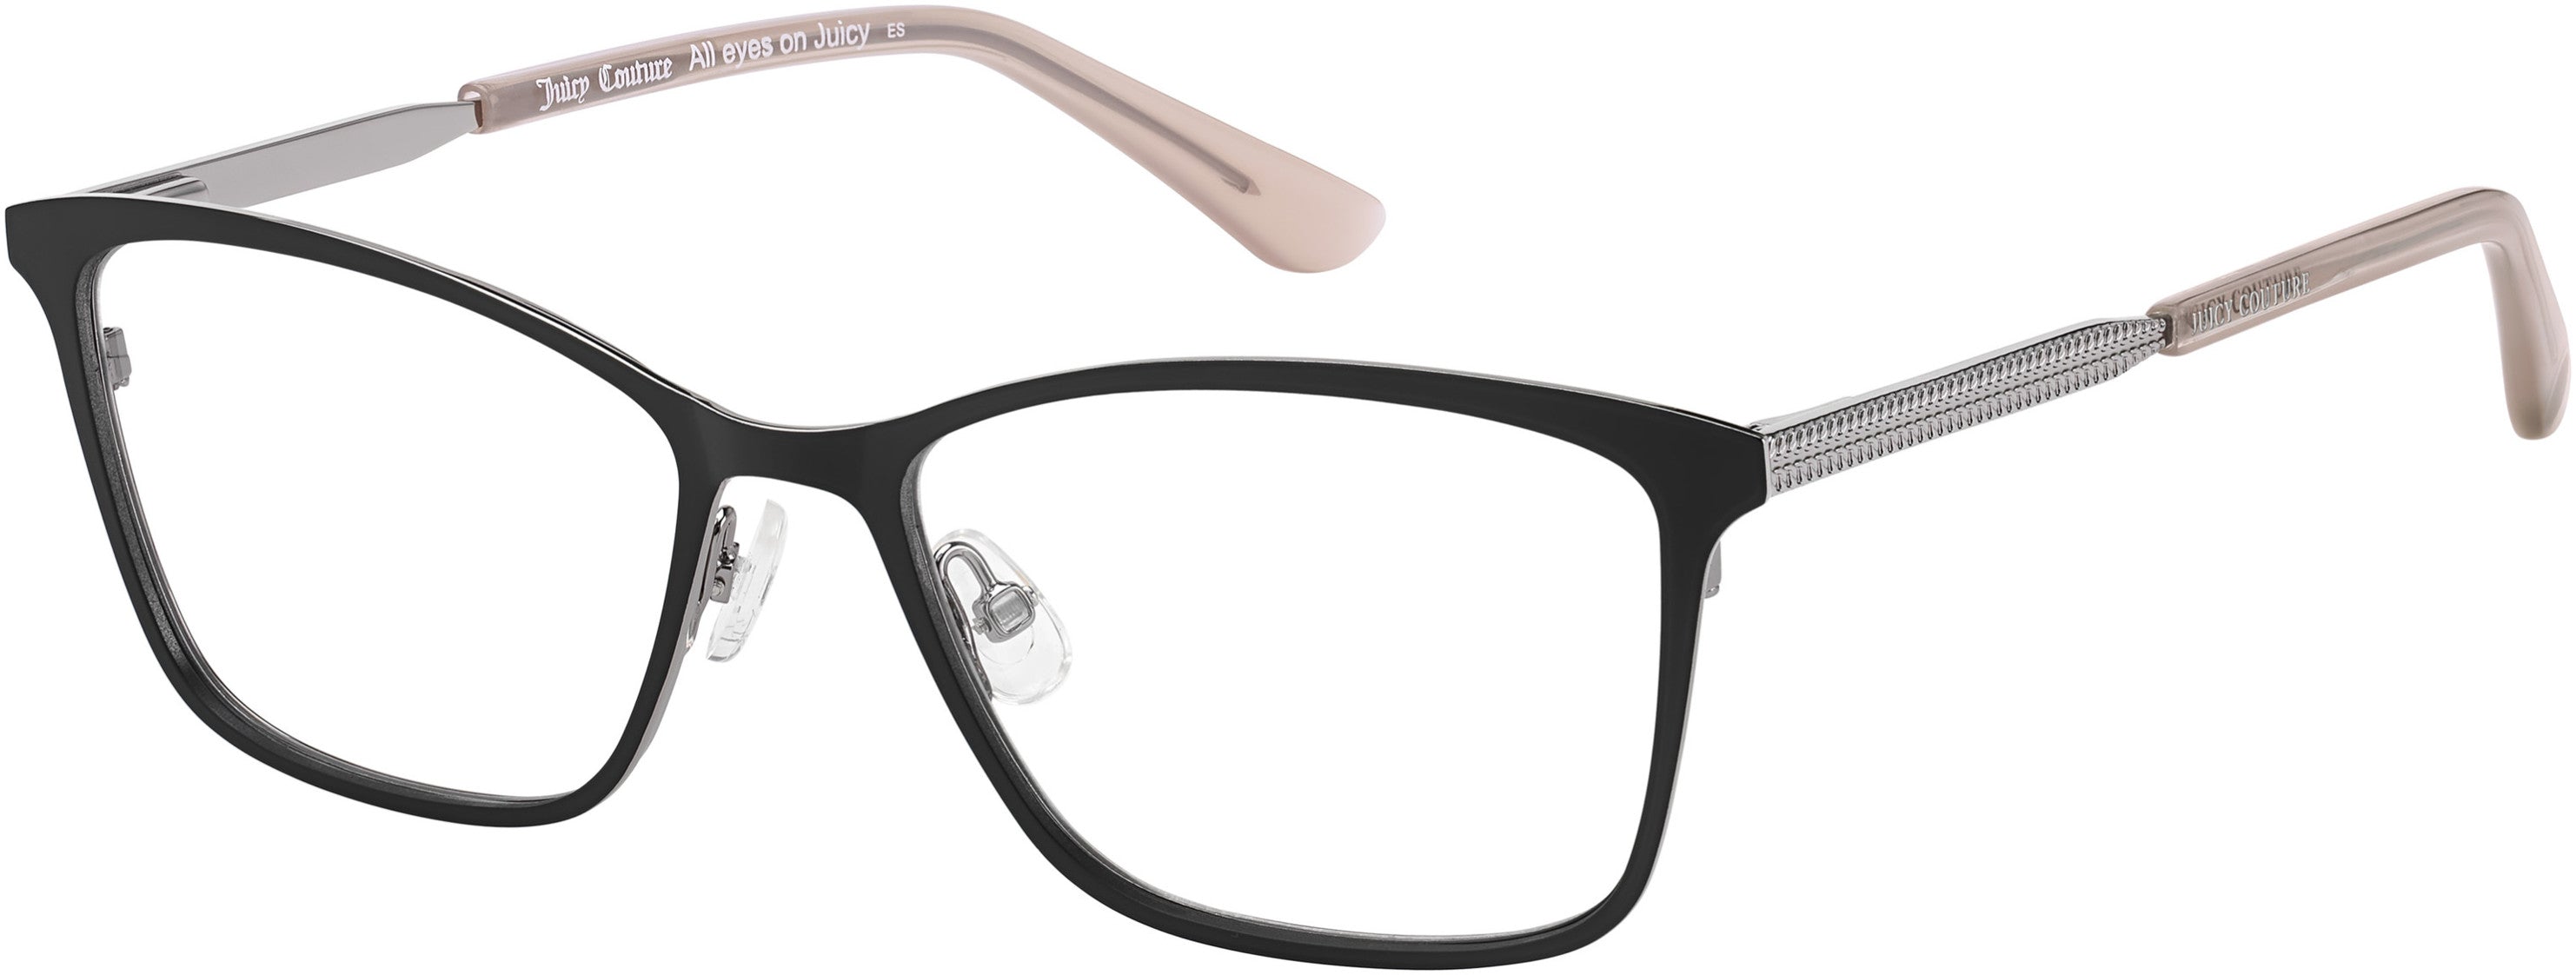 Juicy Couture Juicy 190 Rectangular Eyeglasses 0003-0003  Matte Black (00 Demo Lens)